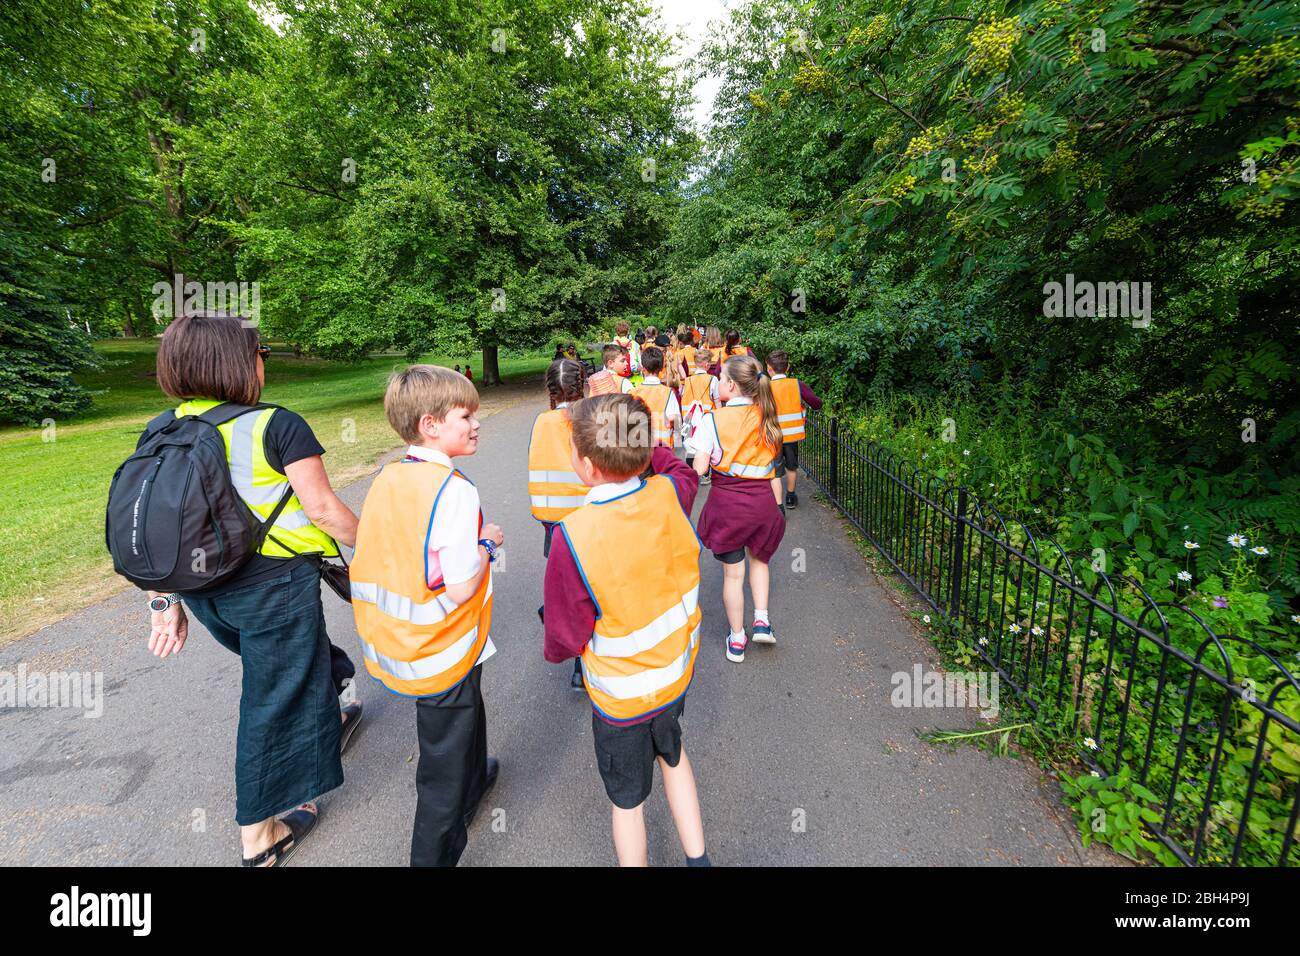 London, UK - June 21, 2018: St James Park green summer with many crowd of people school children walking on sidewalk road on field trip in vests Stock Photo